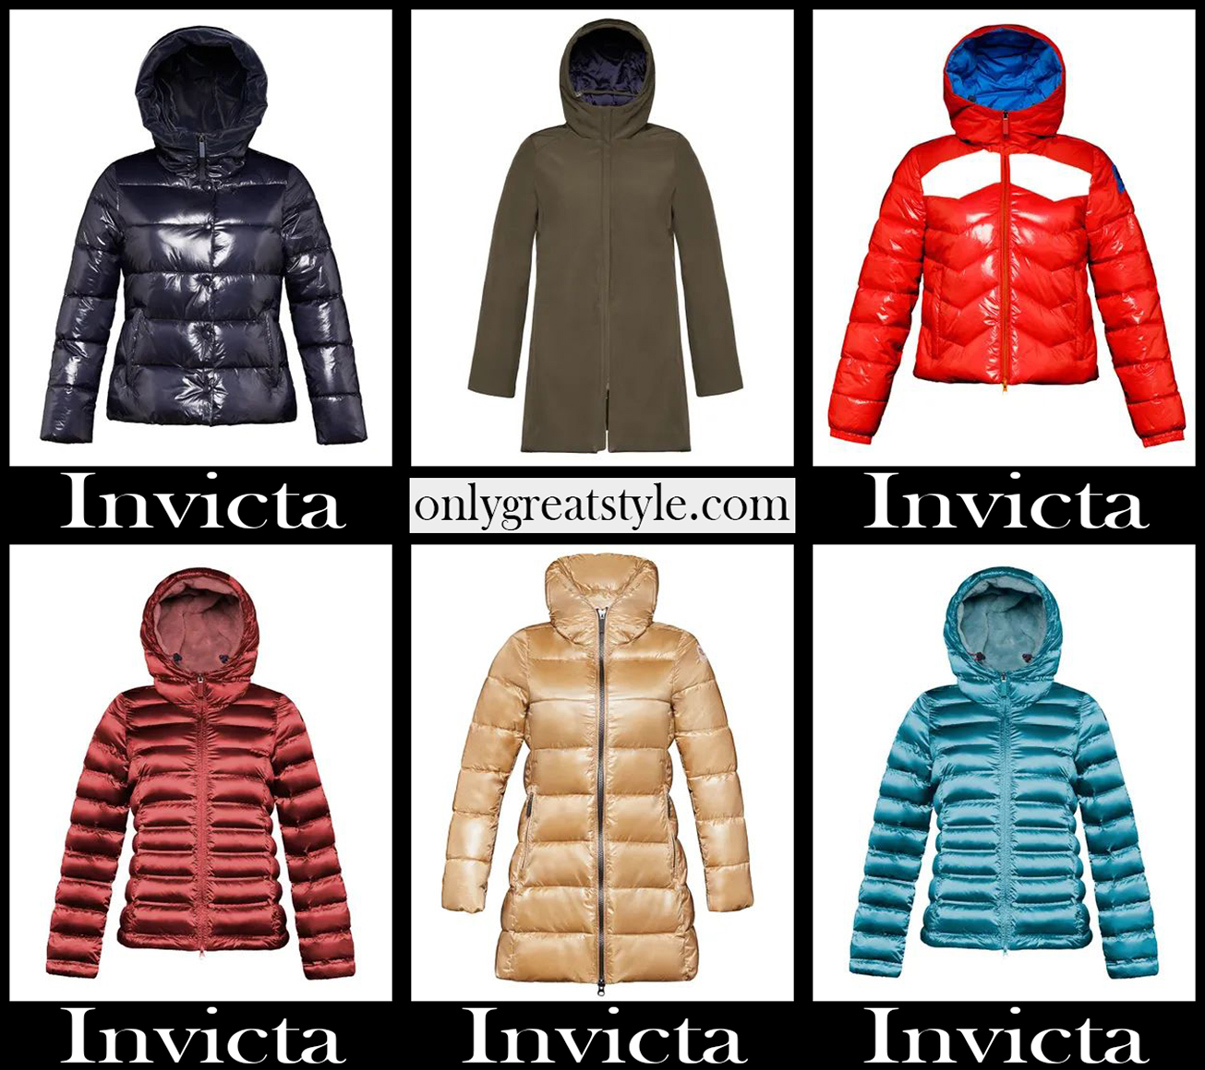 Invicta jackets 20 2021 fall winter womens clothing